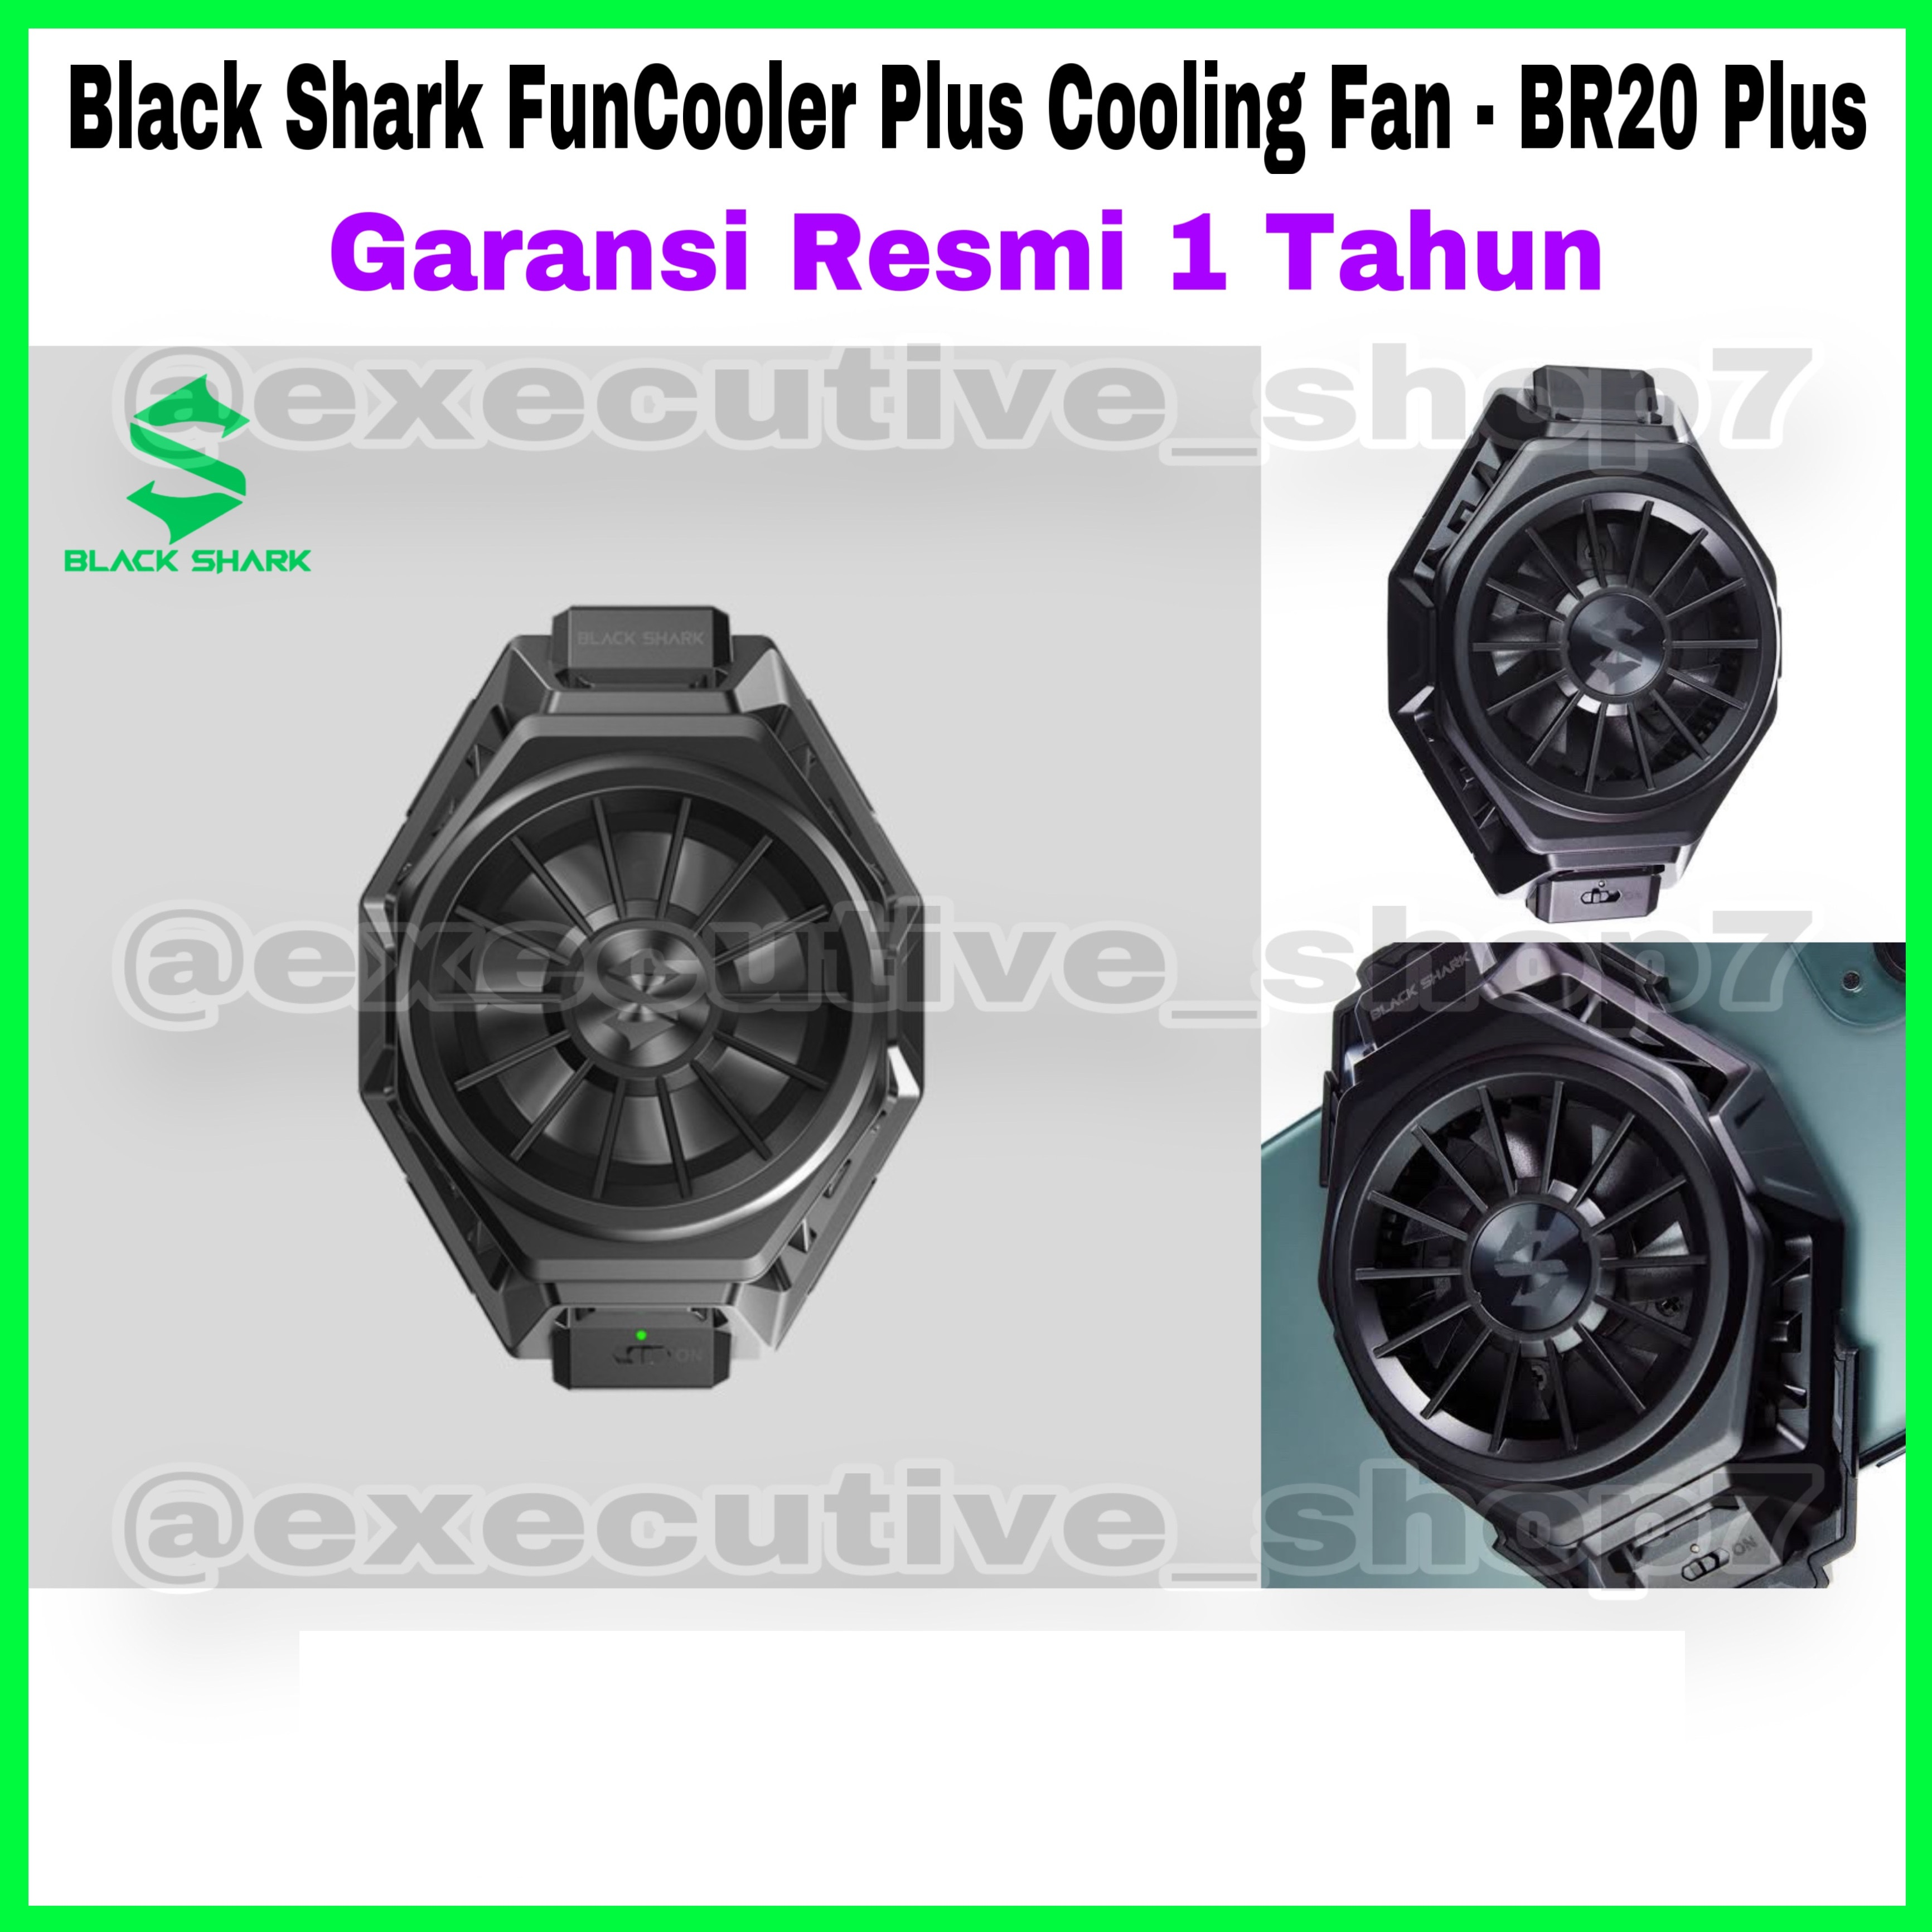 Black Shark FunCooler Plus Non RGB - BR20 - Garansi Resmi 1 Tahun